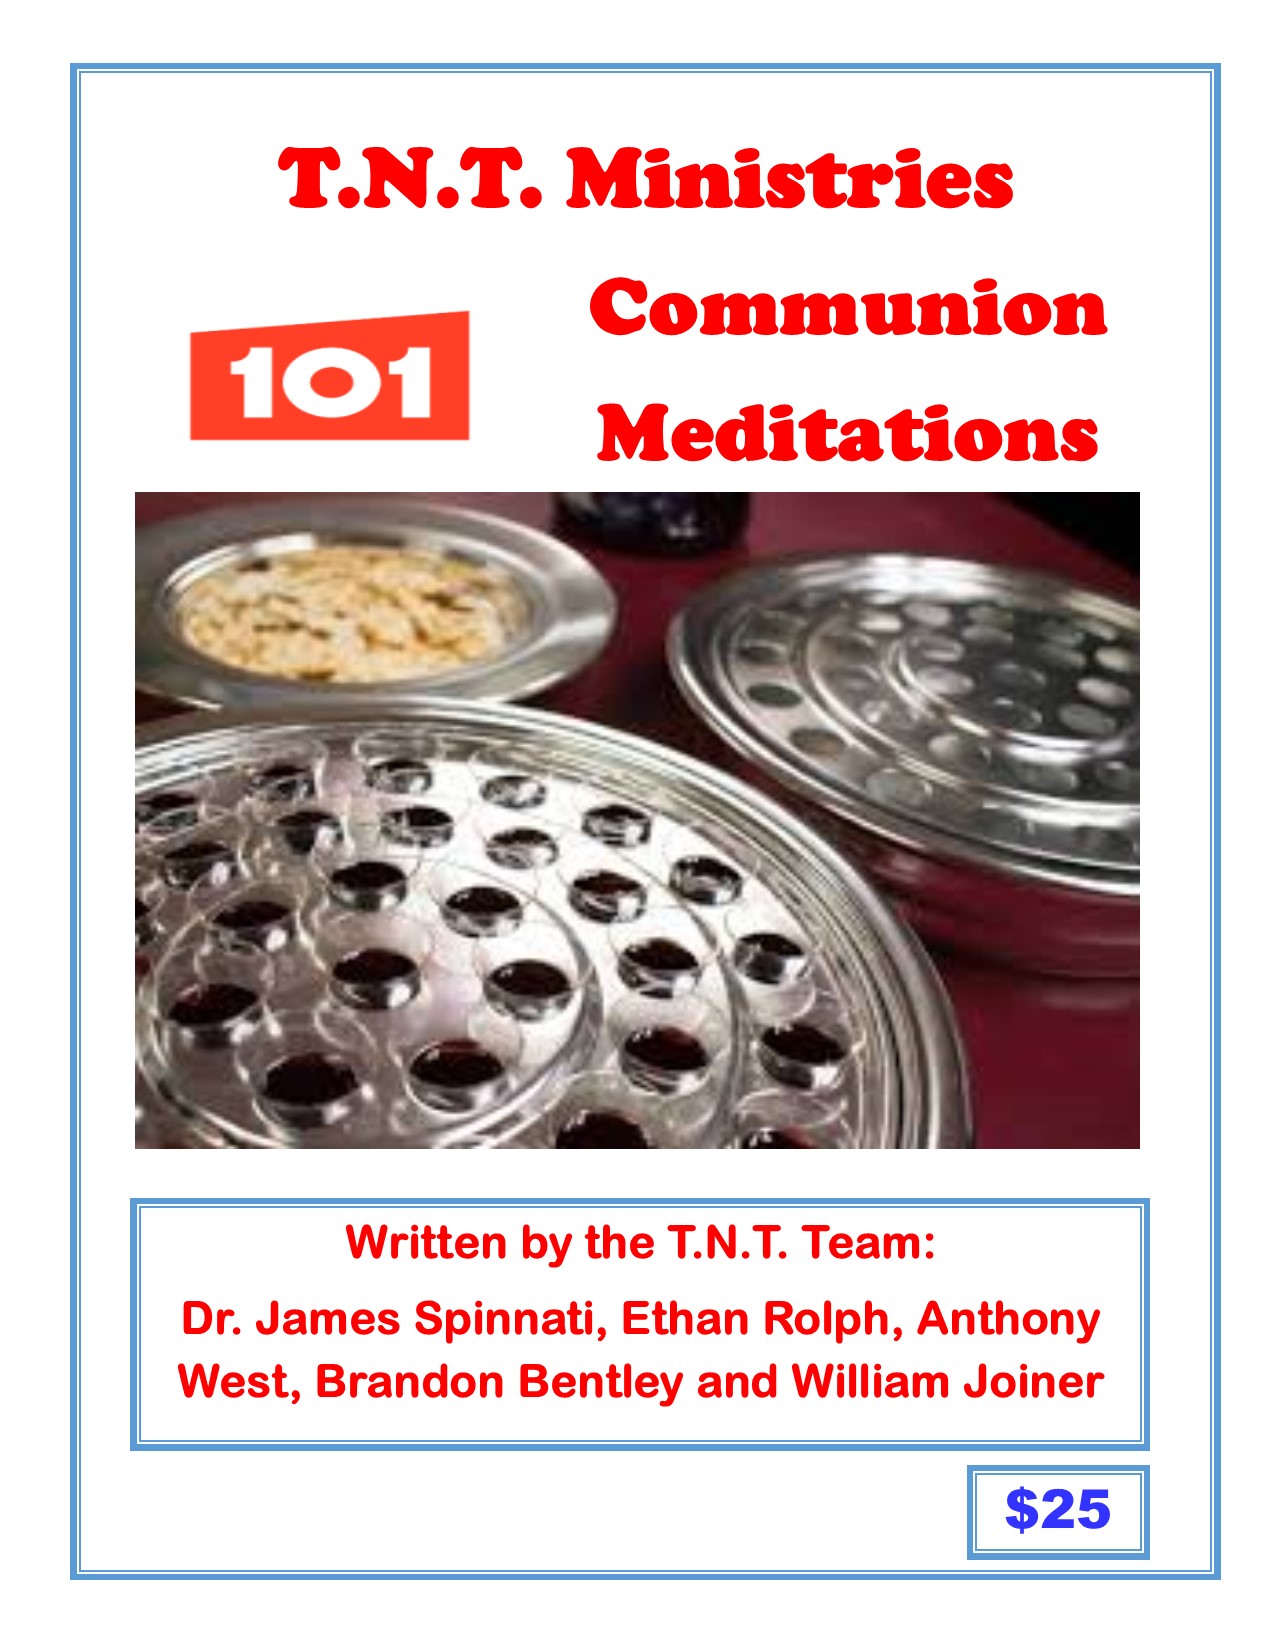 101 Communion Meditations